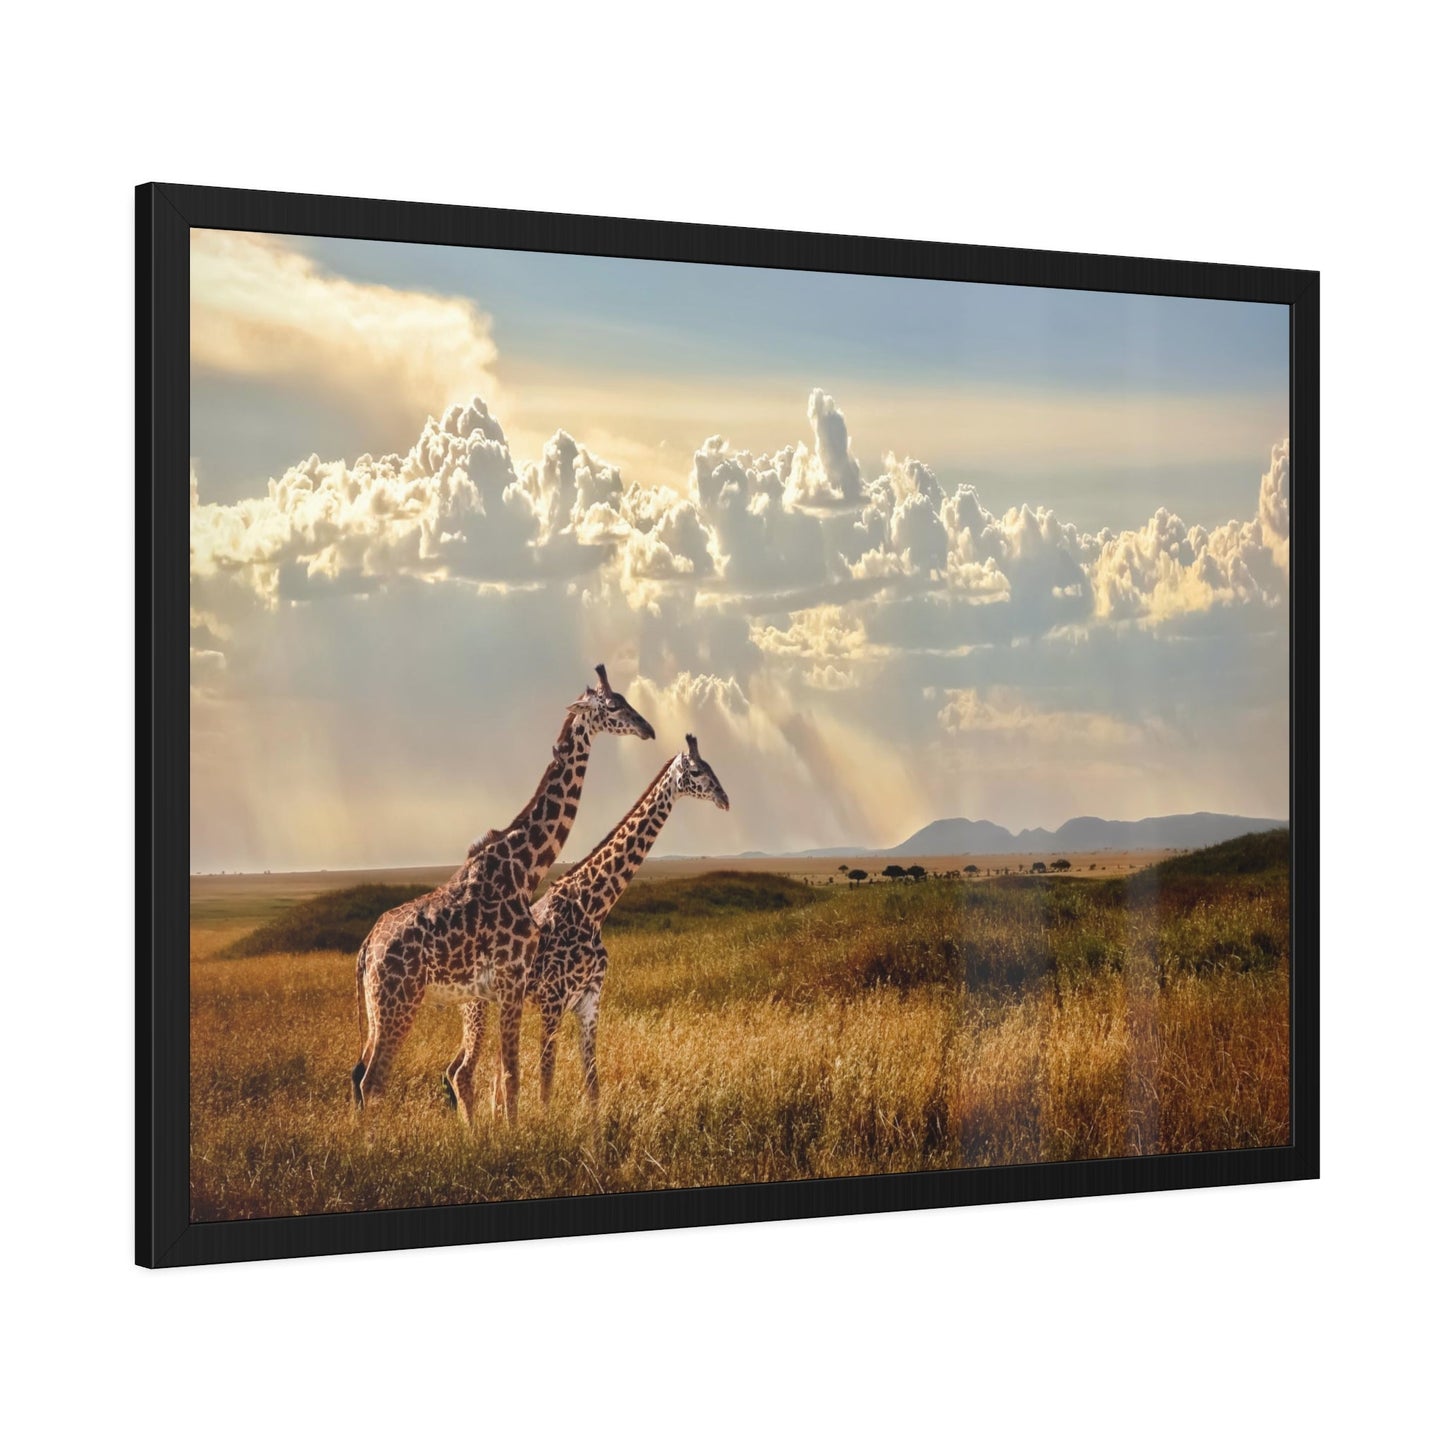 Graceful Giants: Striking Print on Canvas of Giraffes in Motion